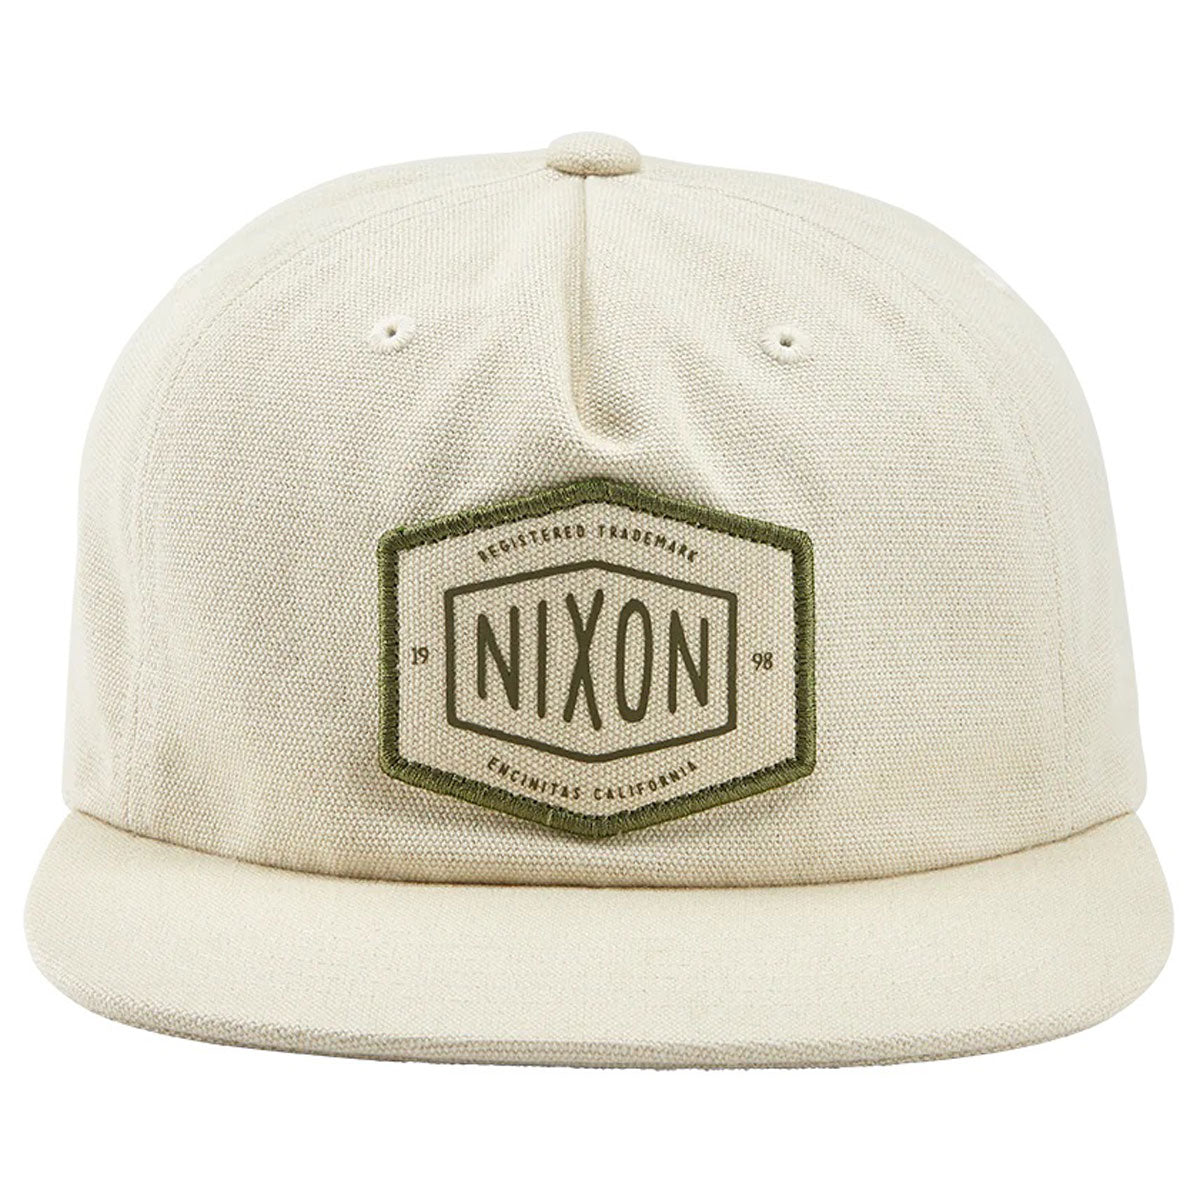 Nixon Anderson Strapback Hat - Chalk image 3